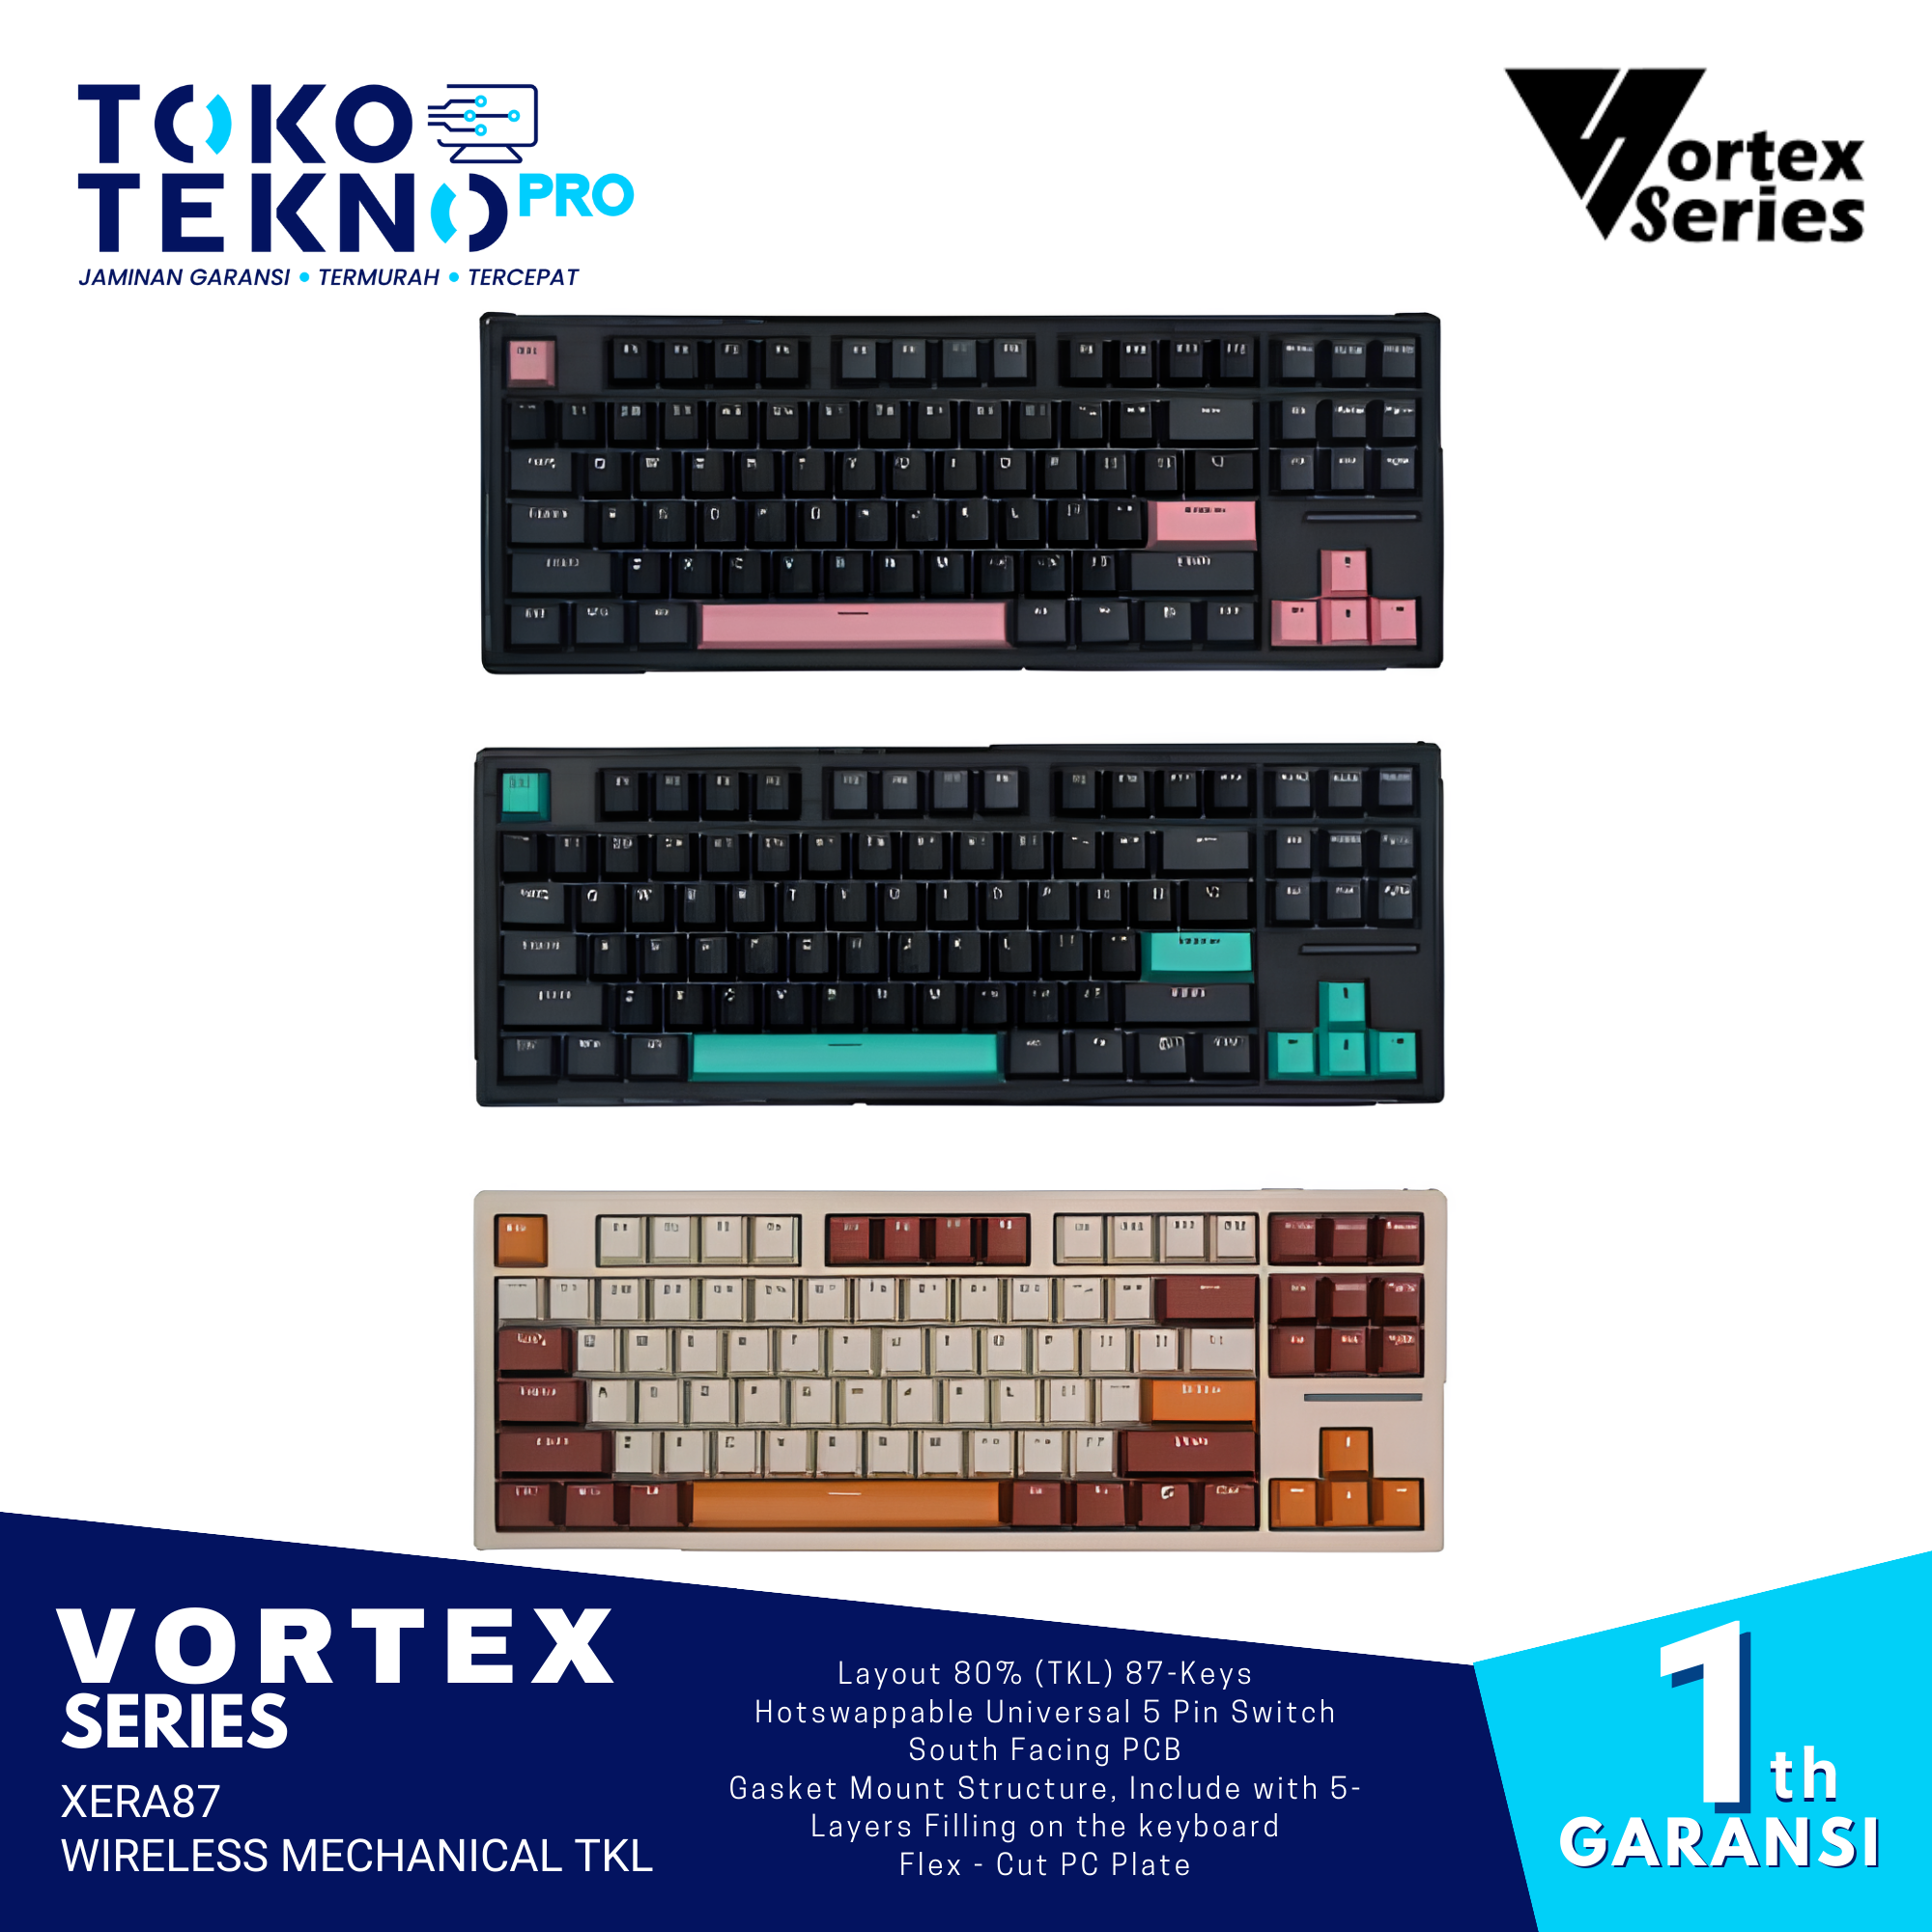 VortexSeries Xera87 / Xera-87 Wired Mechanical TKL Gaming Keyboard